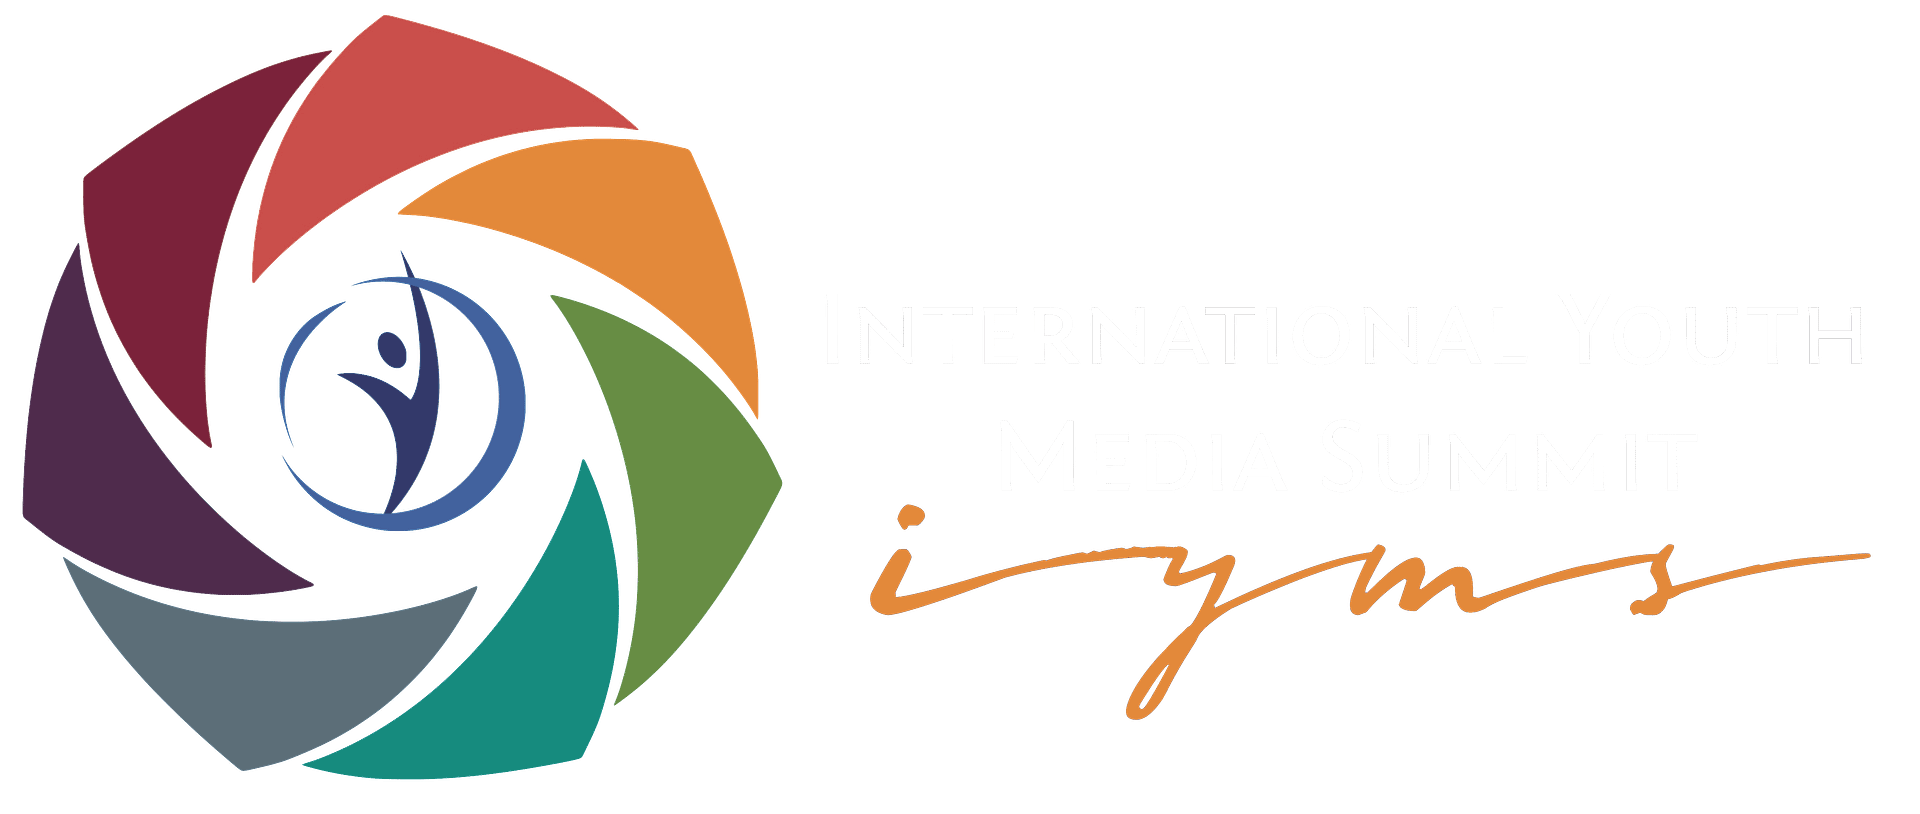 International Youth Media Summit